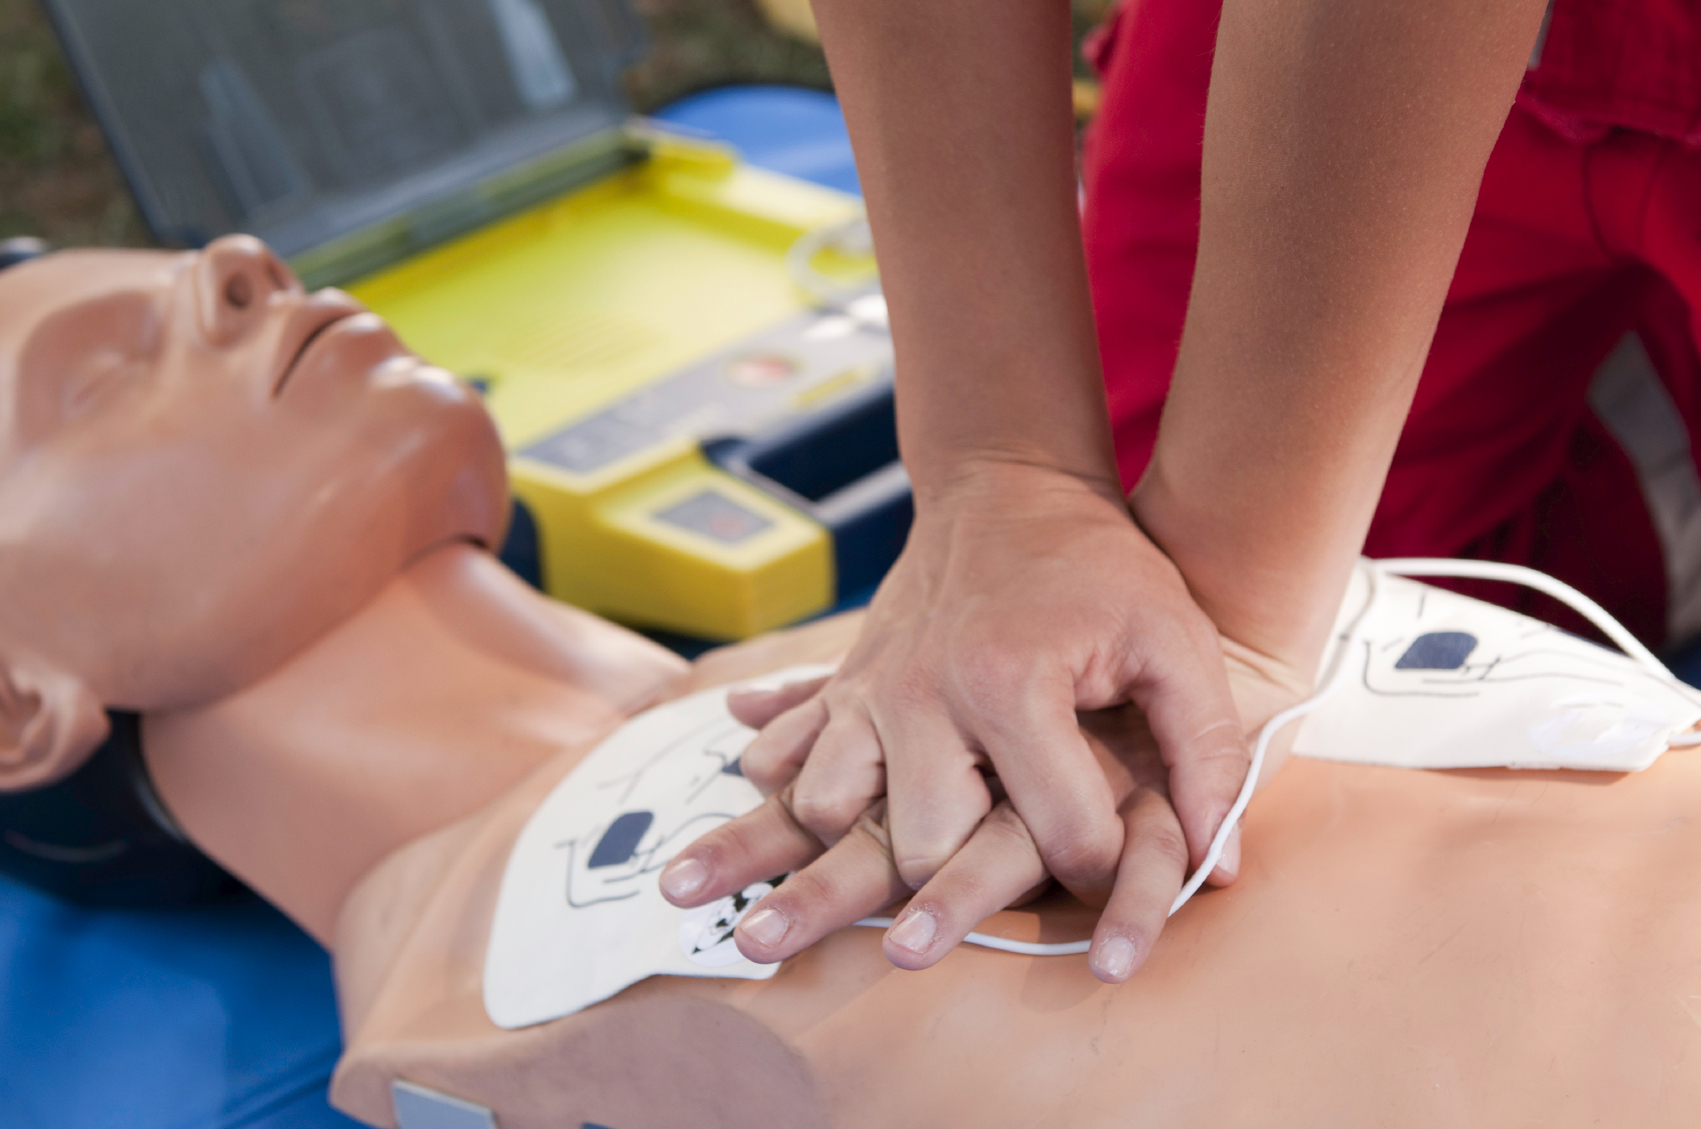 Elementary First Aid CPR Defibrillator training